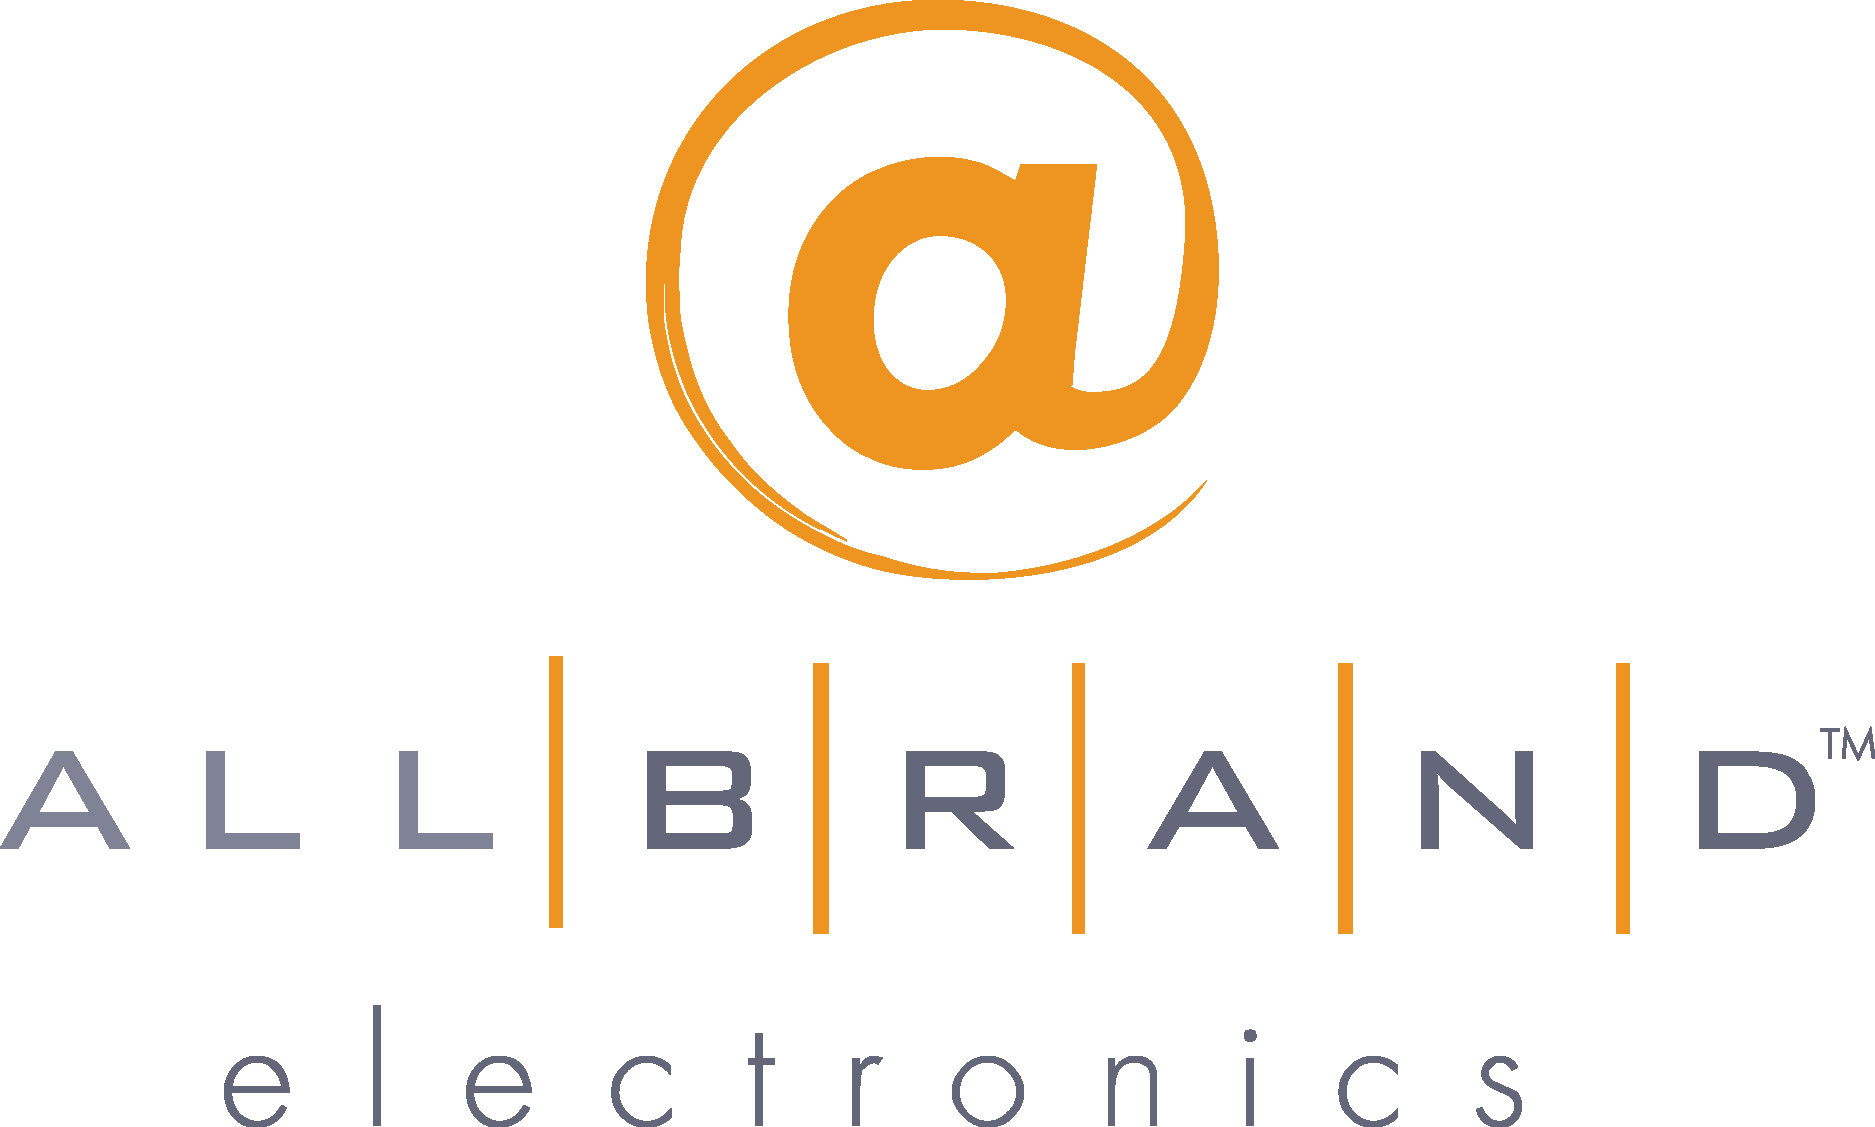 LG Electronics Logo PNG Transparent & SVG Vector - Freebie Supply